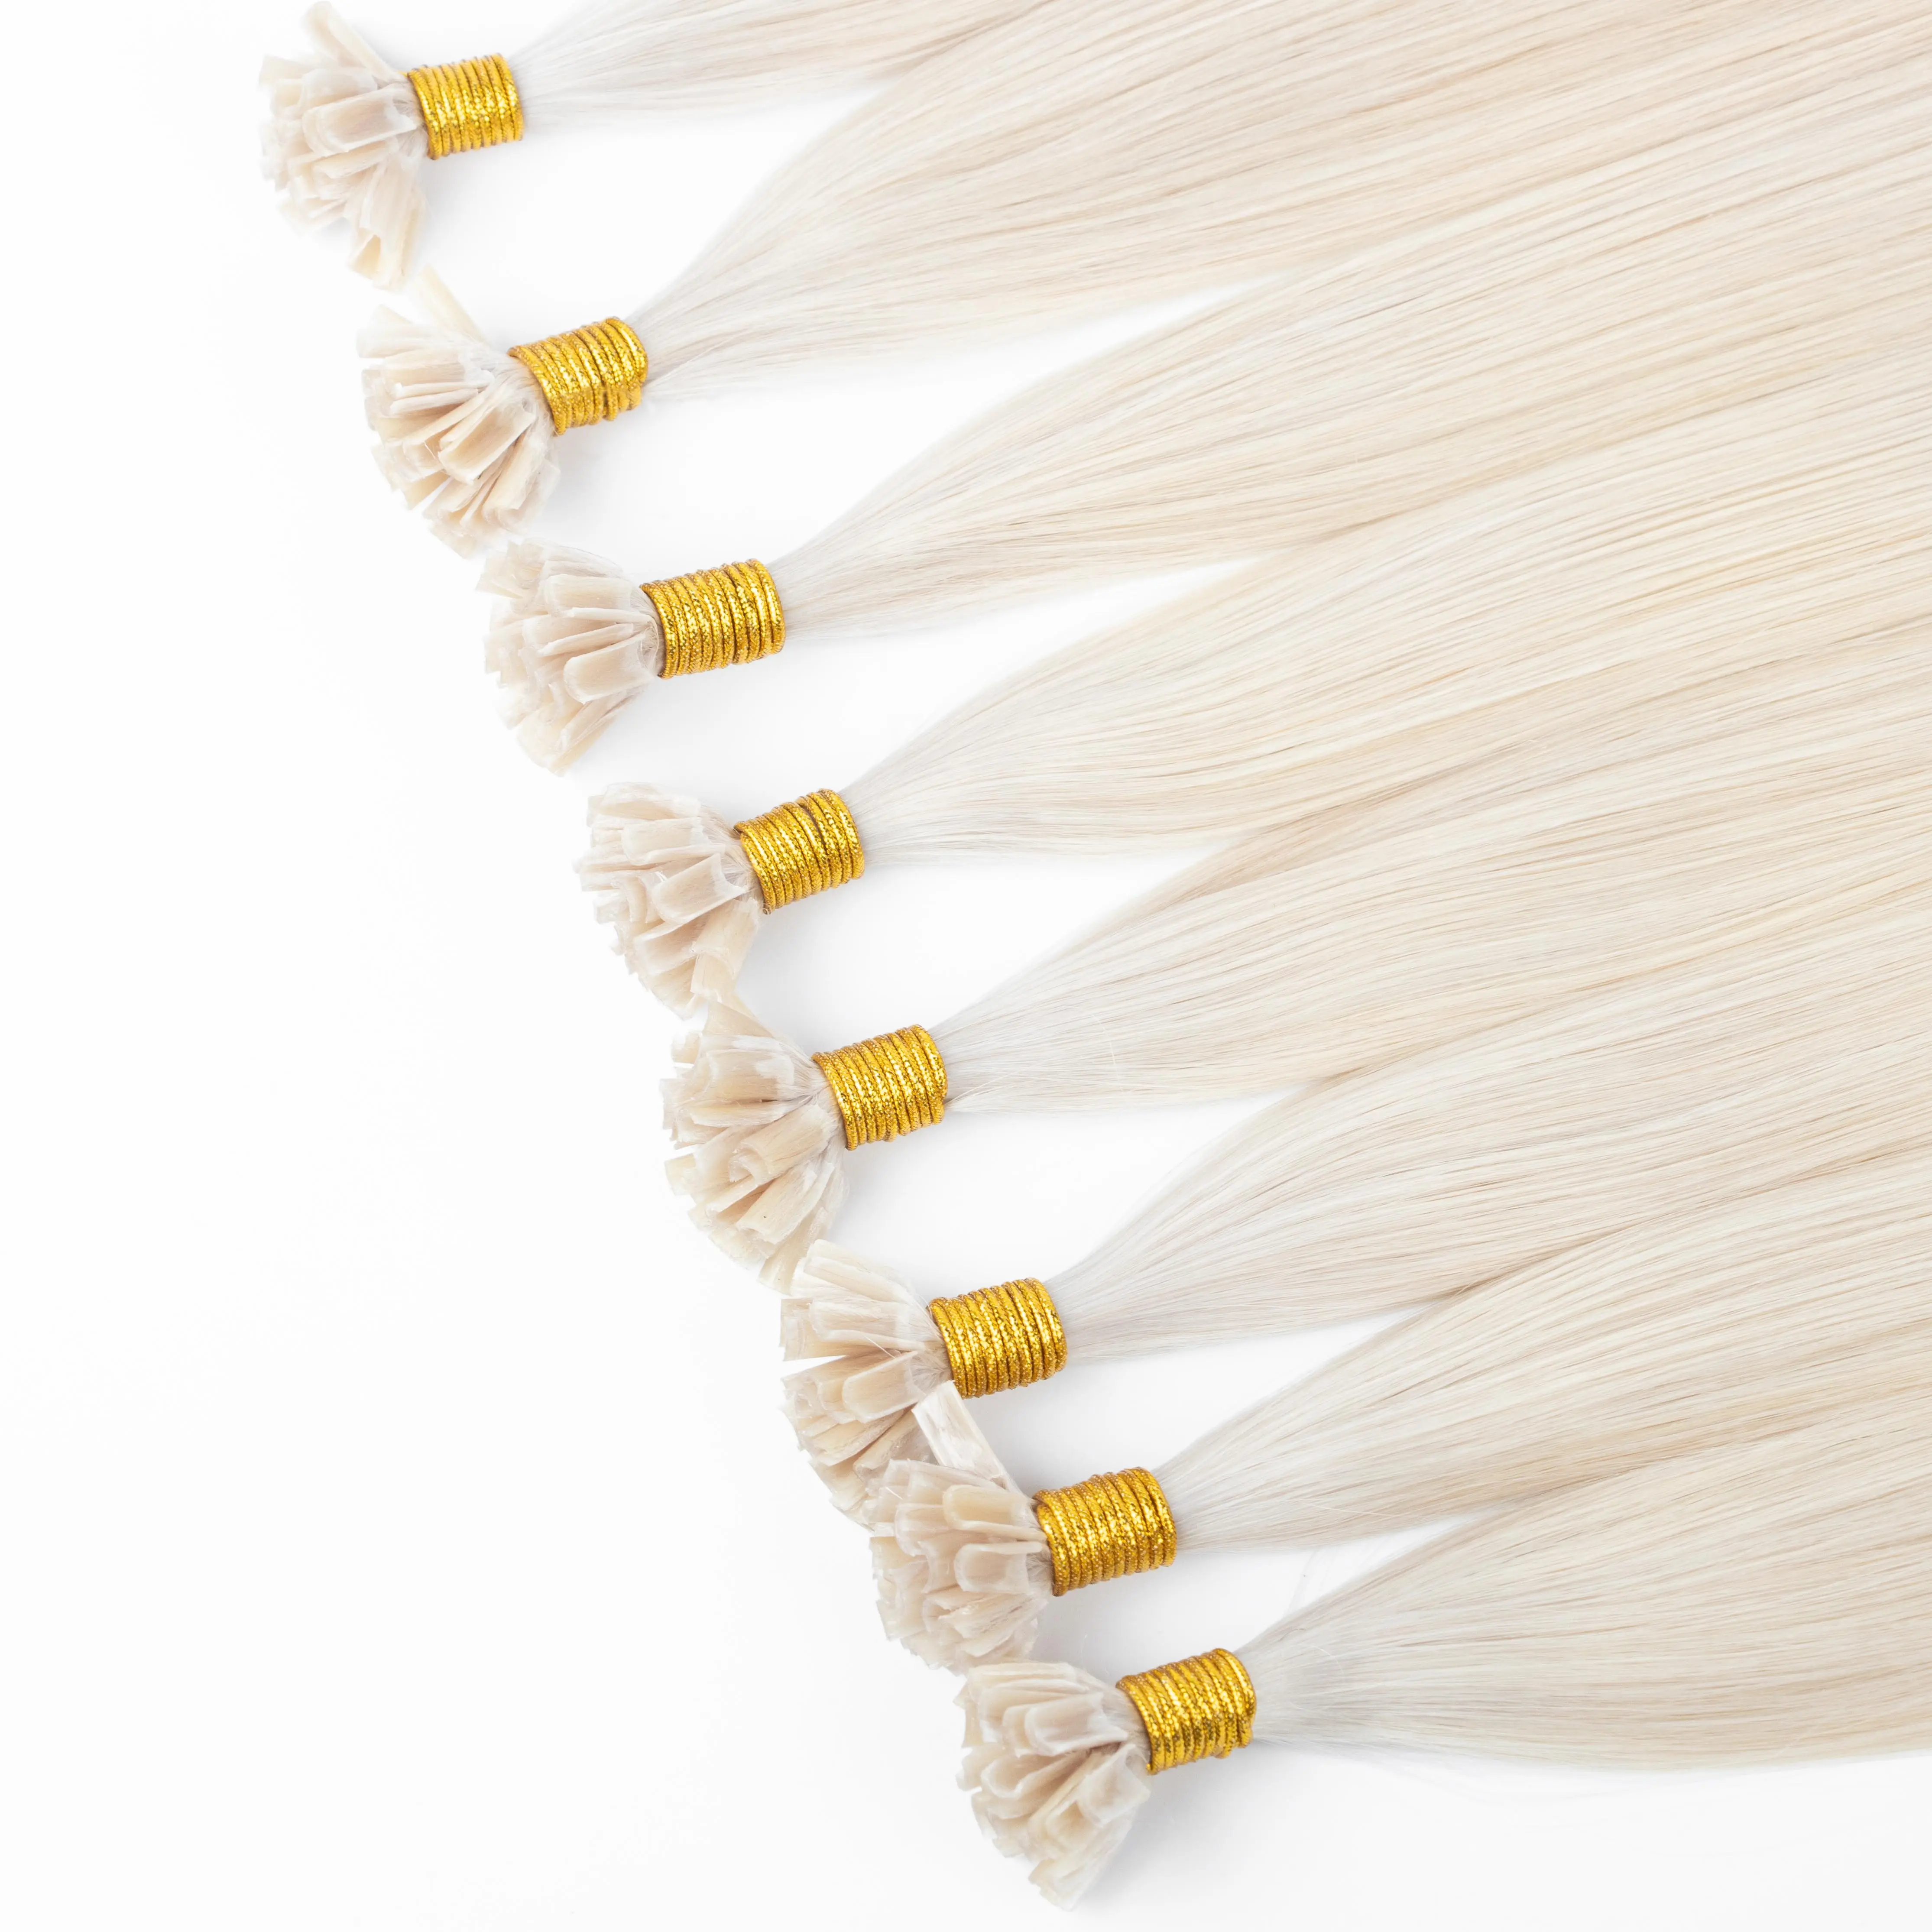 Einzelsp ender blonde Farbe rohe U-Spitze Keratin gebunden Echthaar verlängerungen U-Spitze Haar verlängerungen